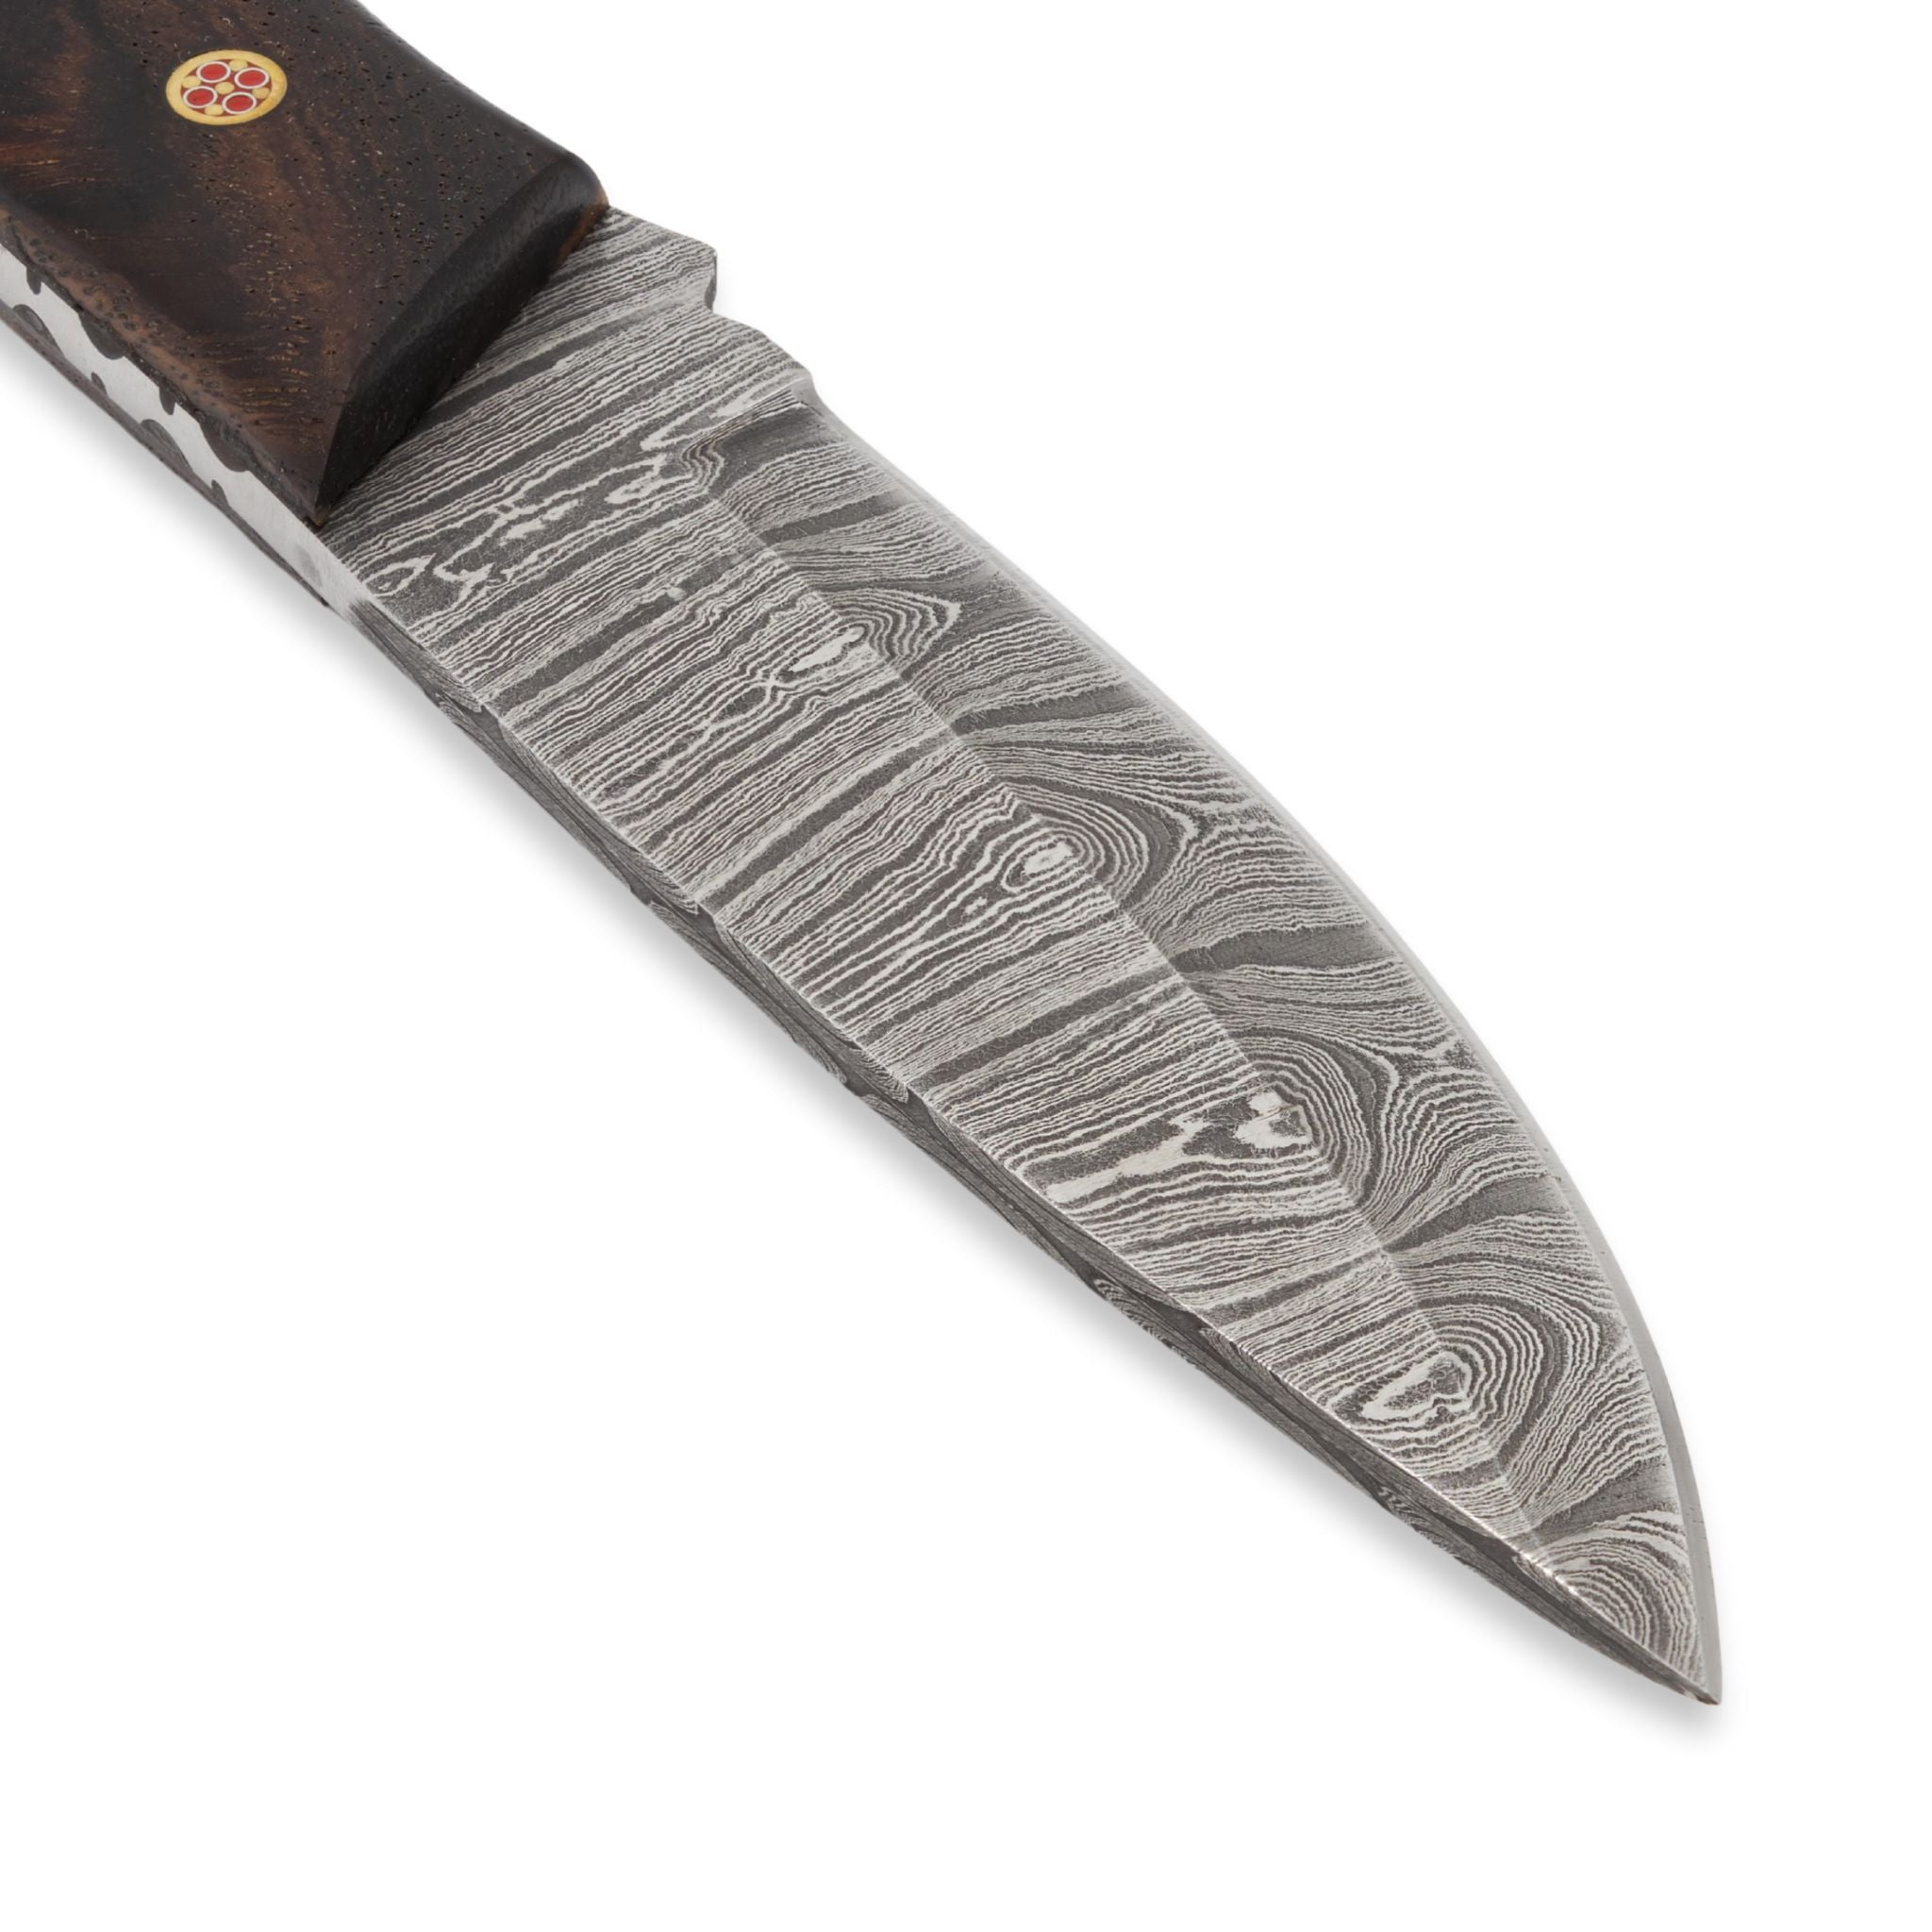 Outback Nomad II Handmade Hunting Knife Damascus Steel Blade Rosewood Handle